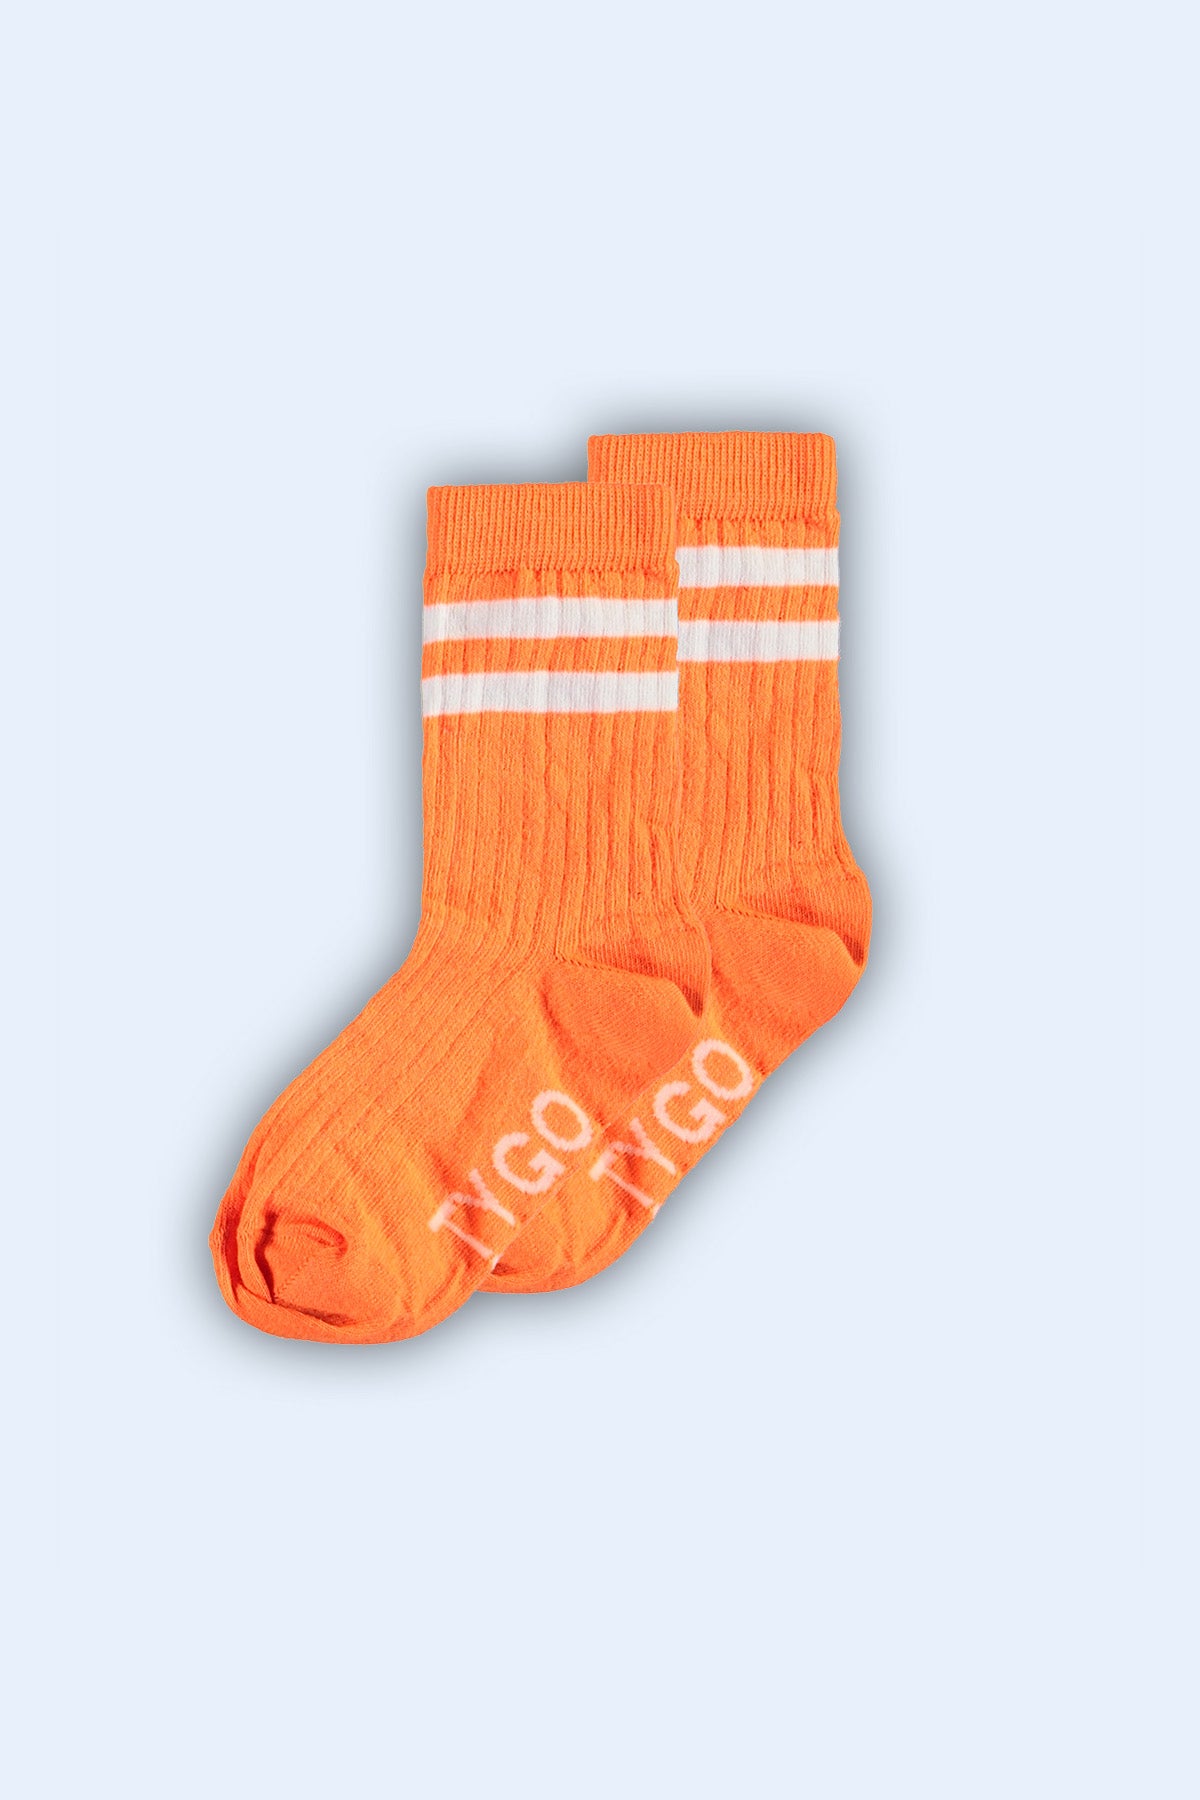 Socks orange clownfish